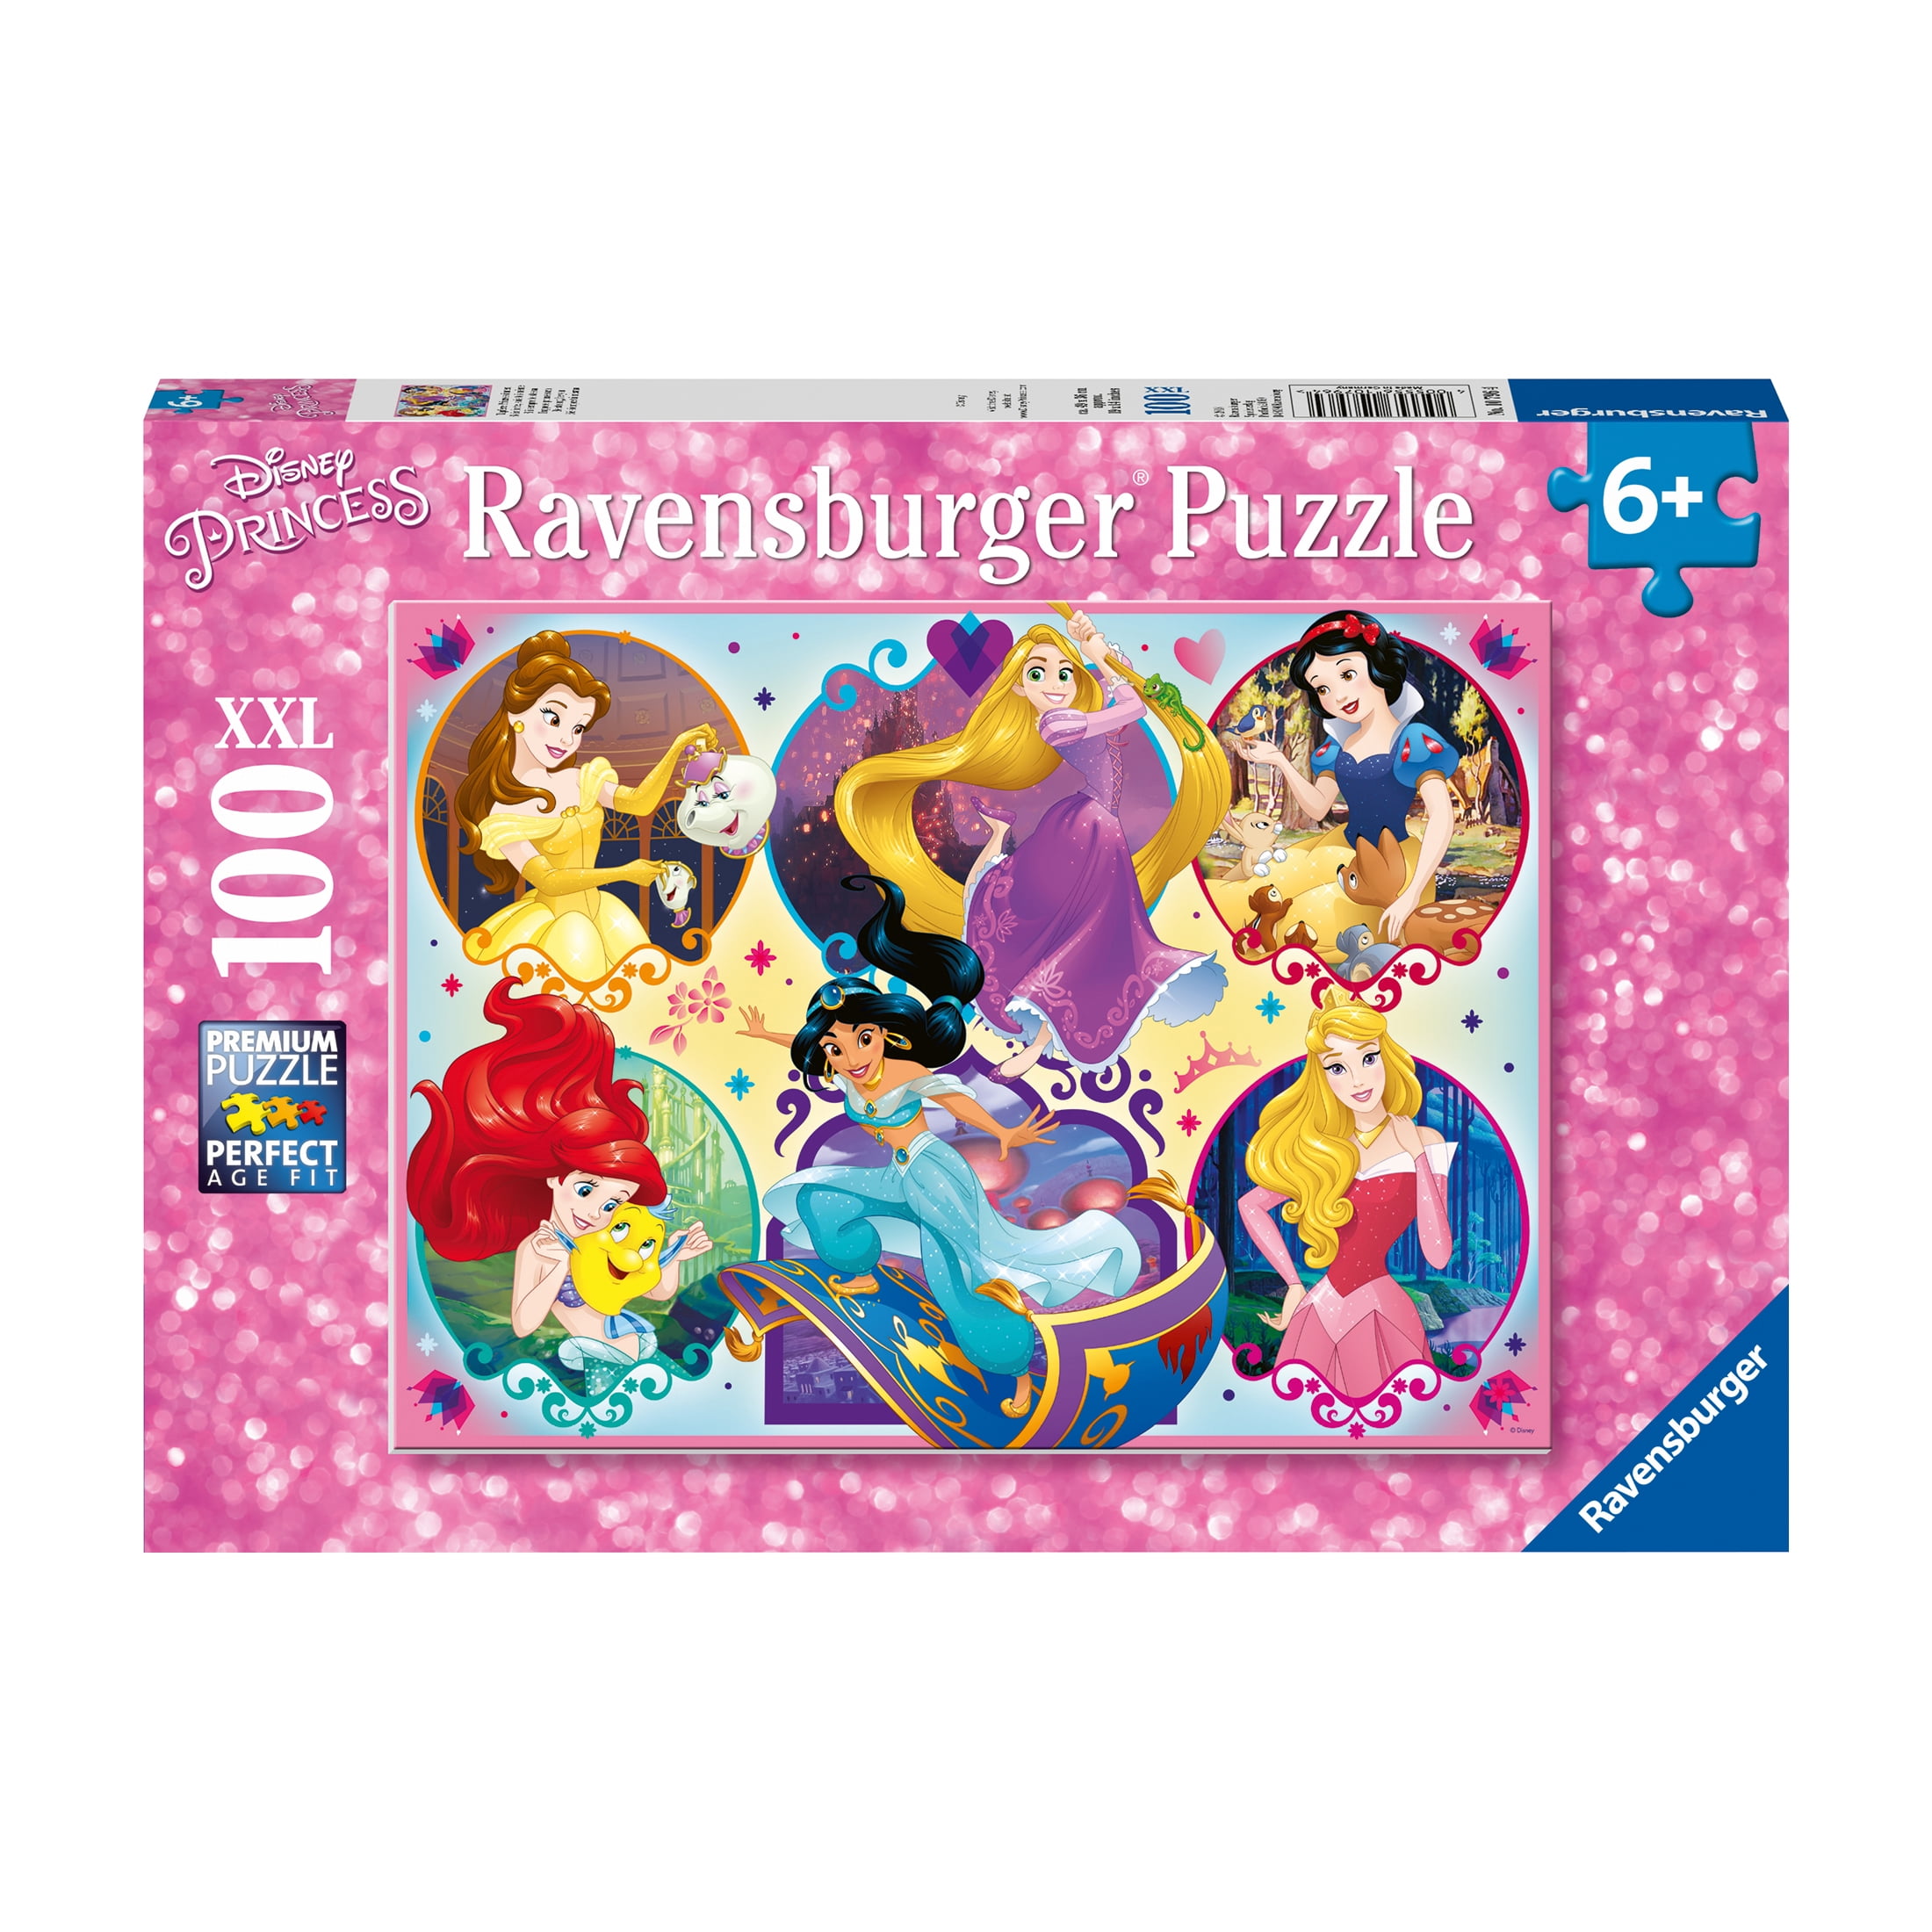 Ravensburger 107964 Disney Princesses 100 Piece Jigsaw Puzzle for Kids XXL 